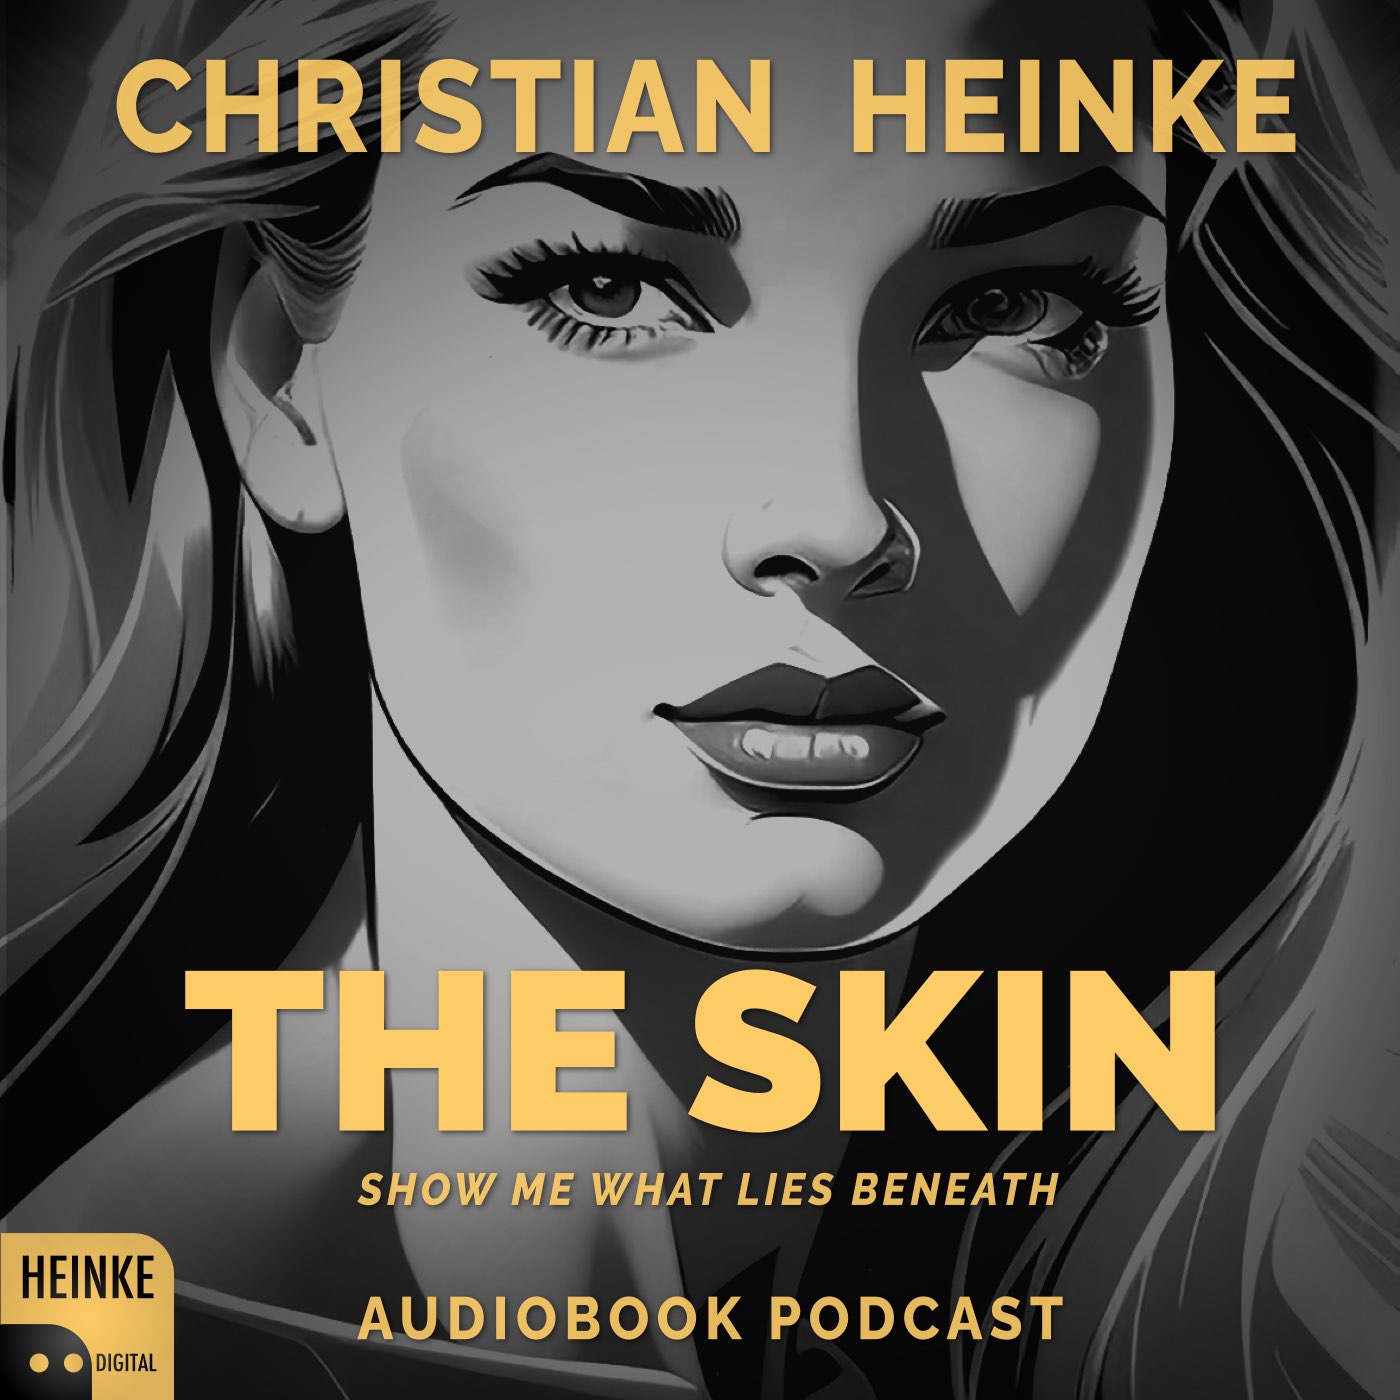 The Skin - Audiobook Podcast